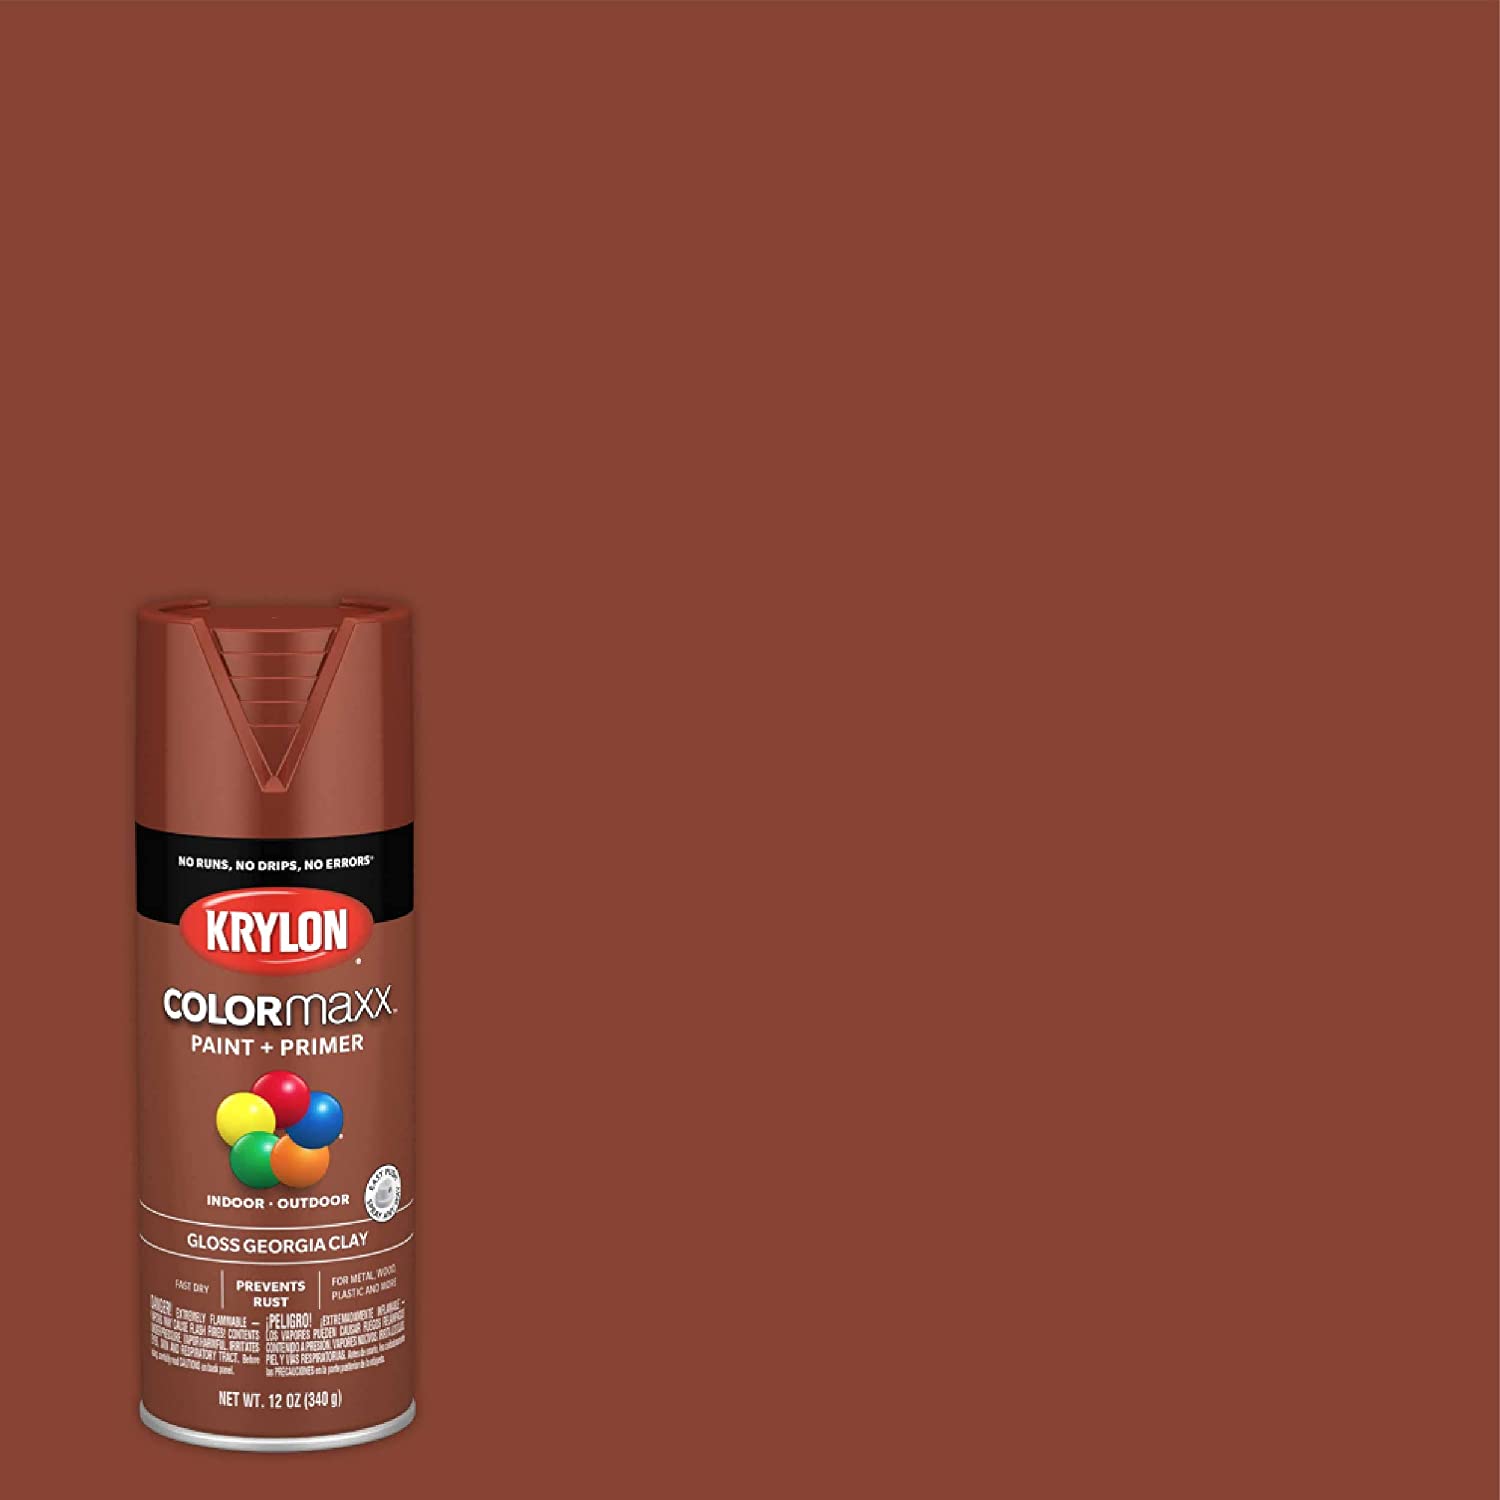 04) Krylon COLORmaxx Spray Paint and Primer color share